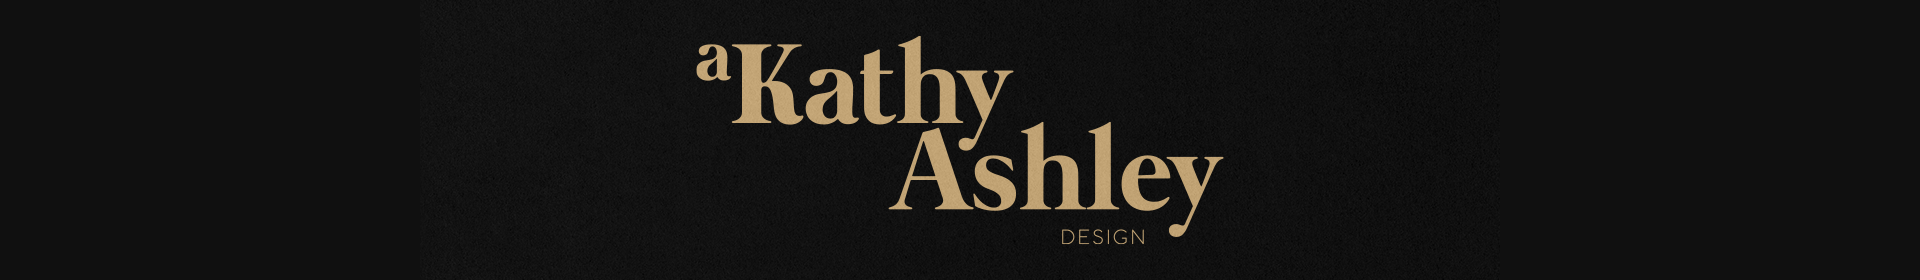 Katherine Ashley's profile banner